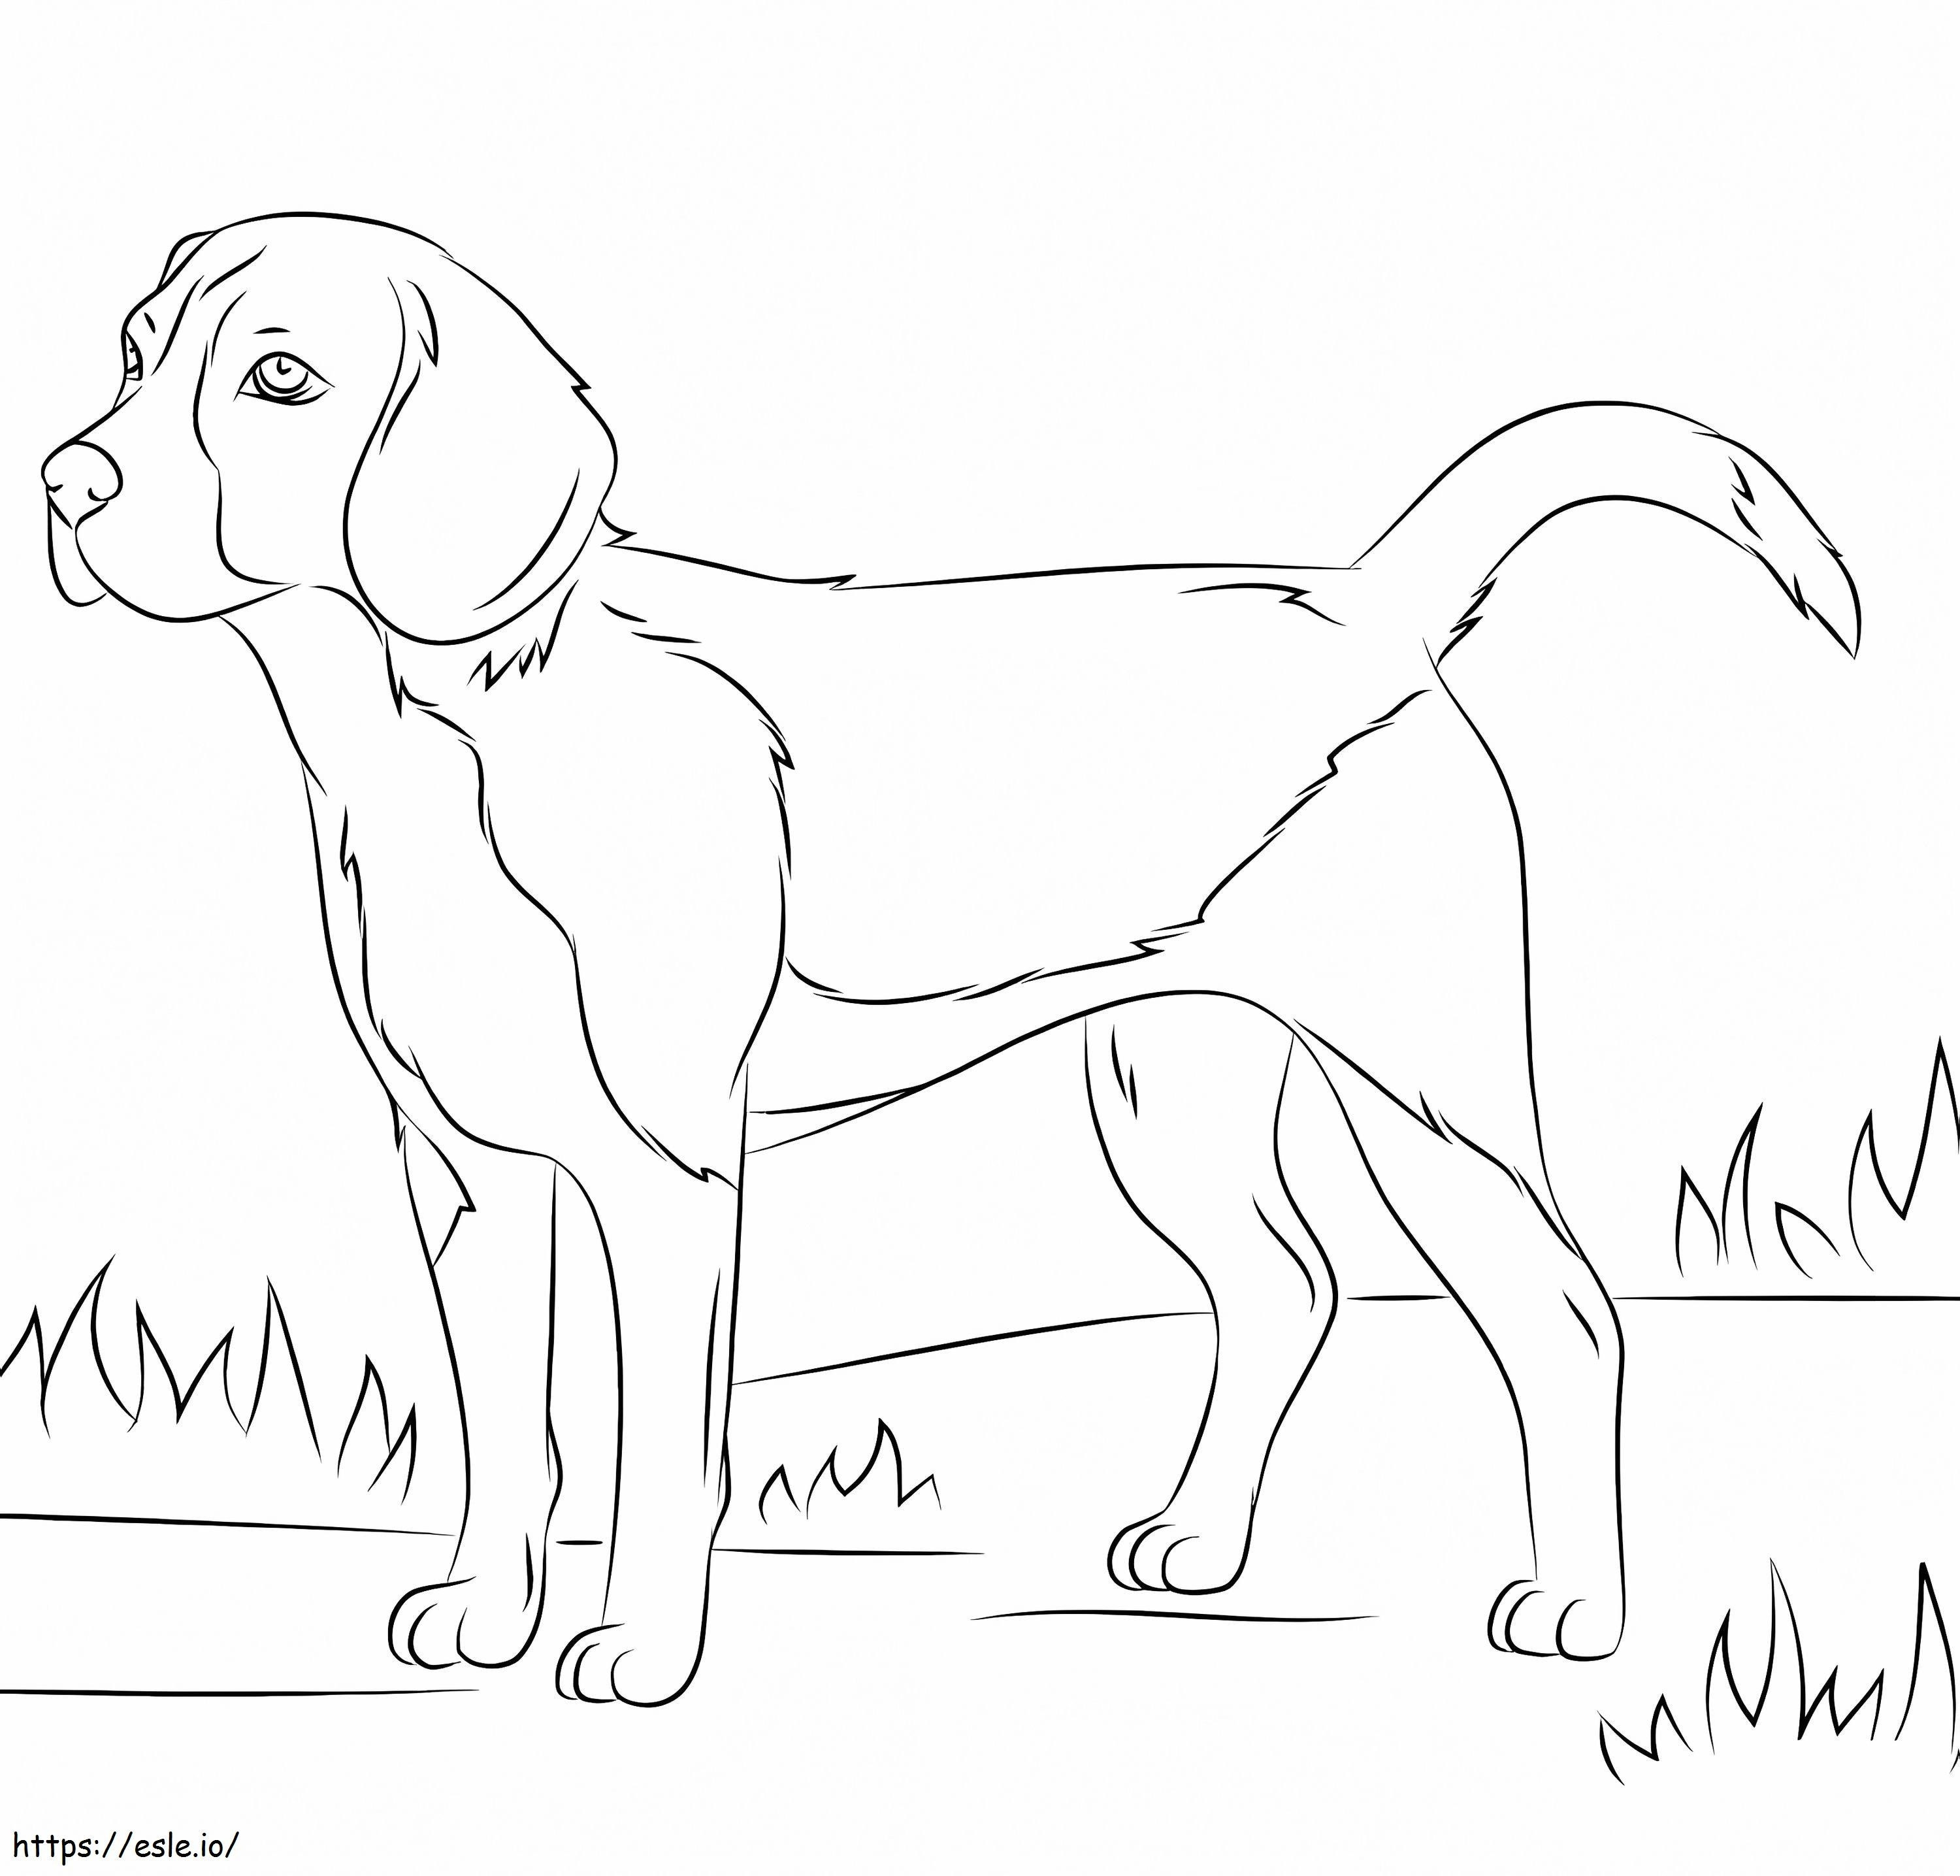 Beagle Dog coloring page